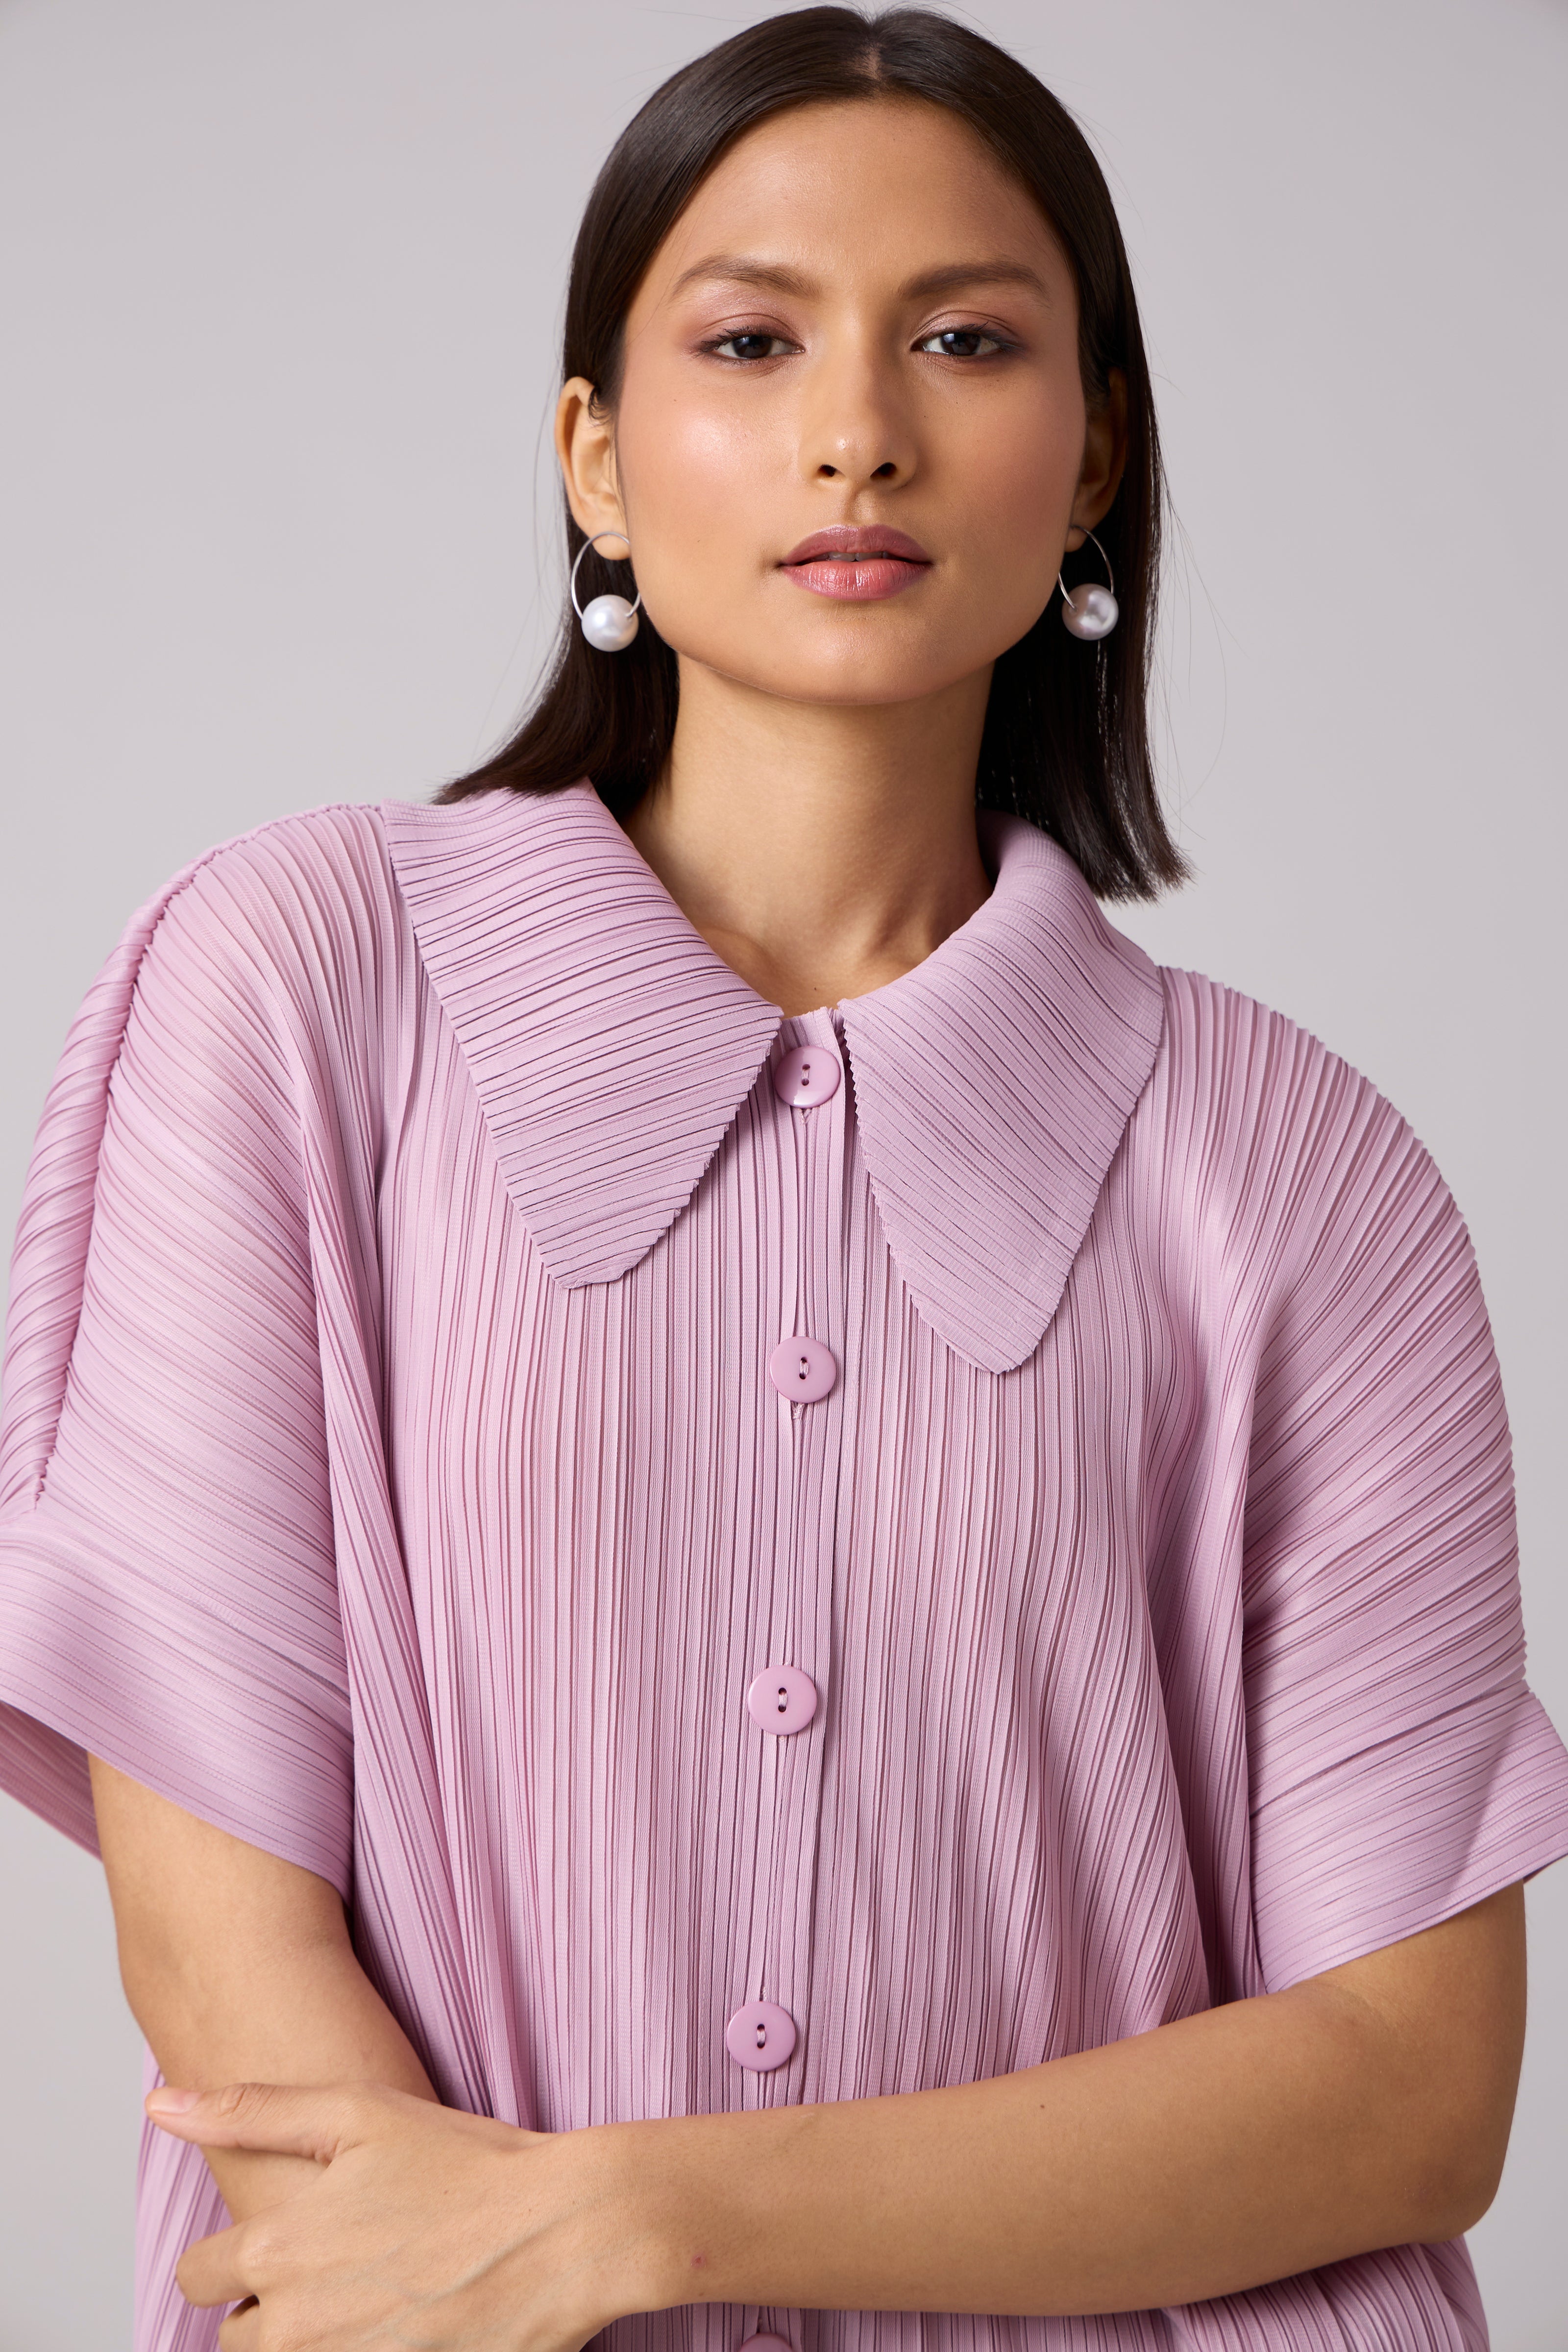 Maria Shirt Set - Onion Pink